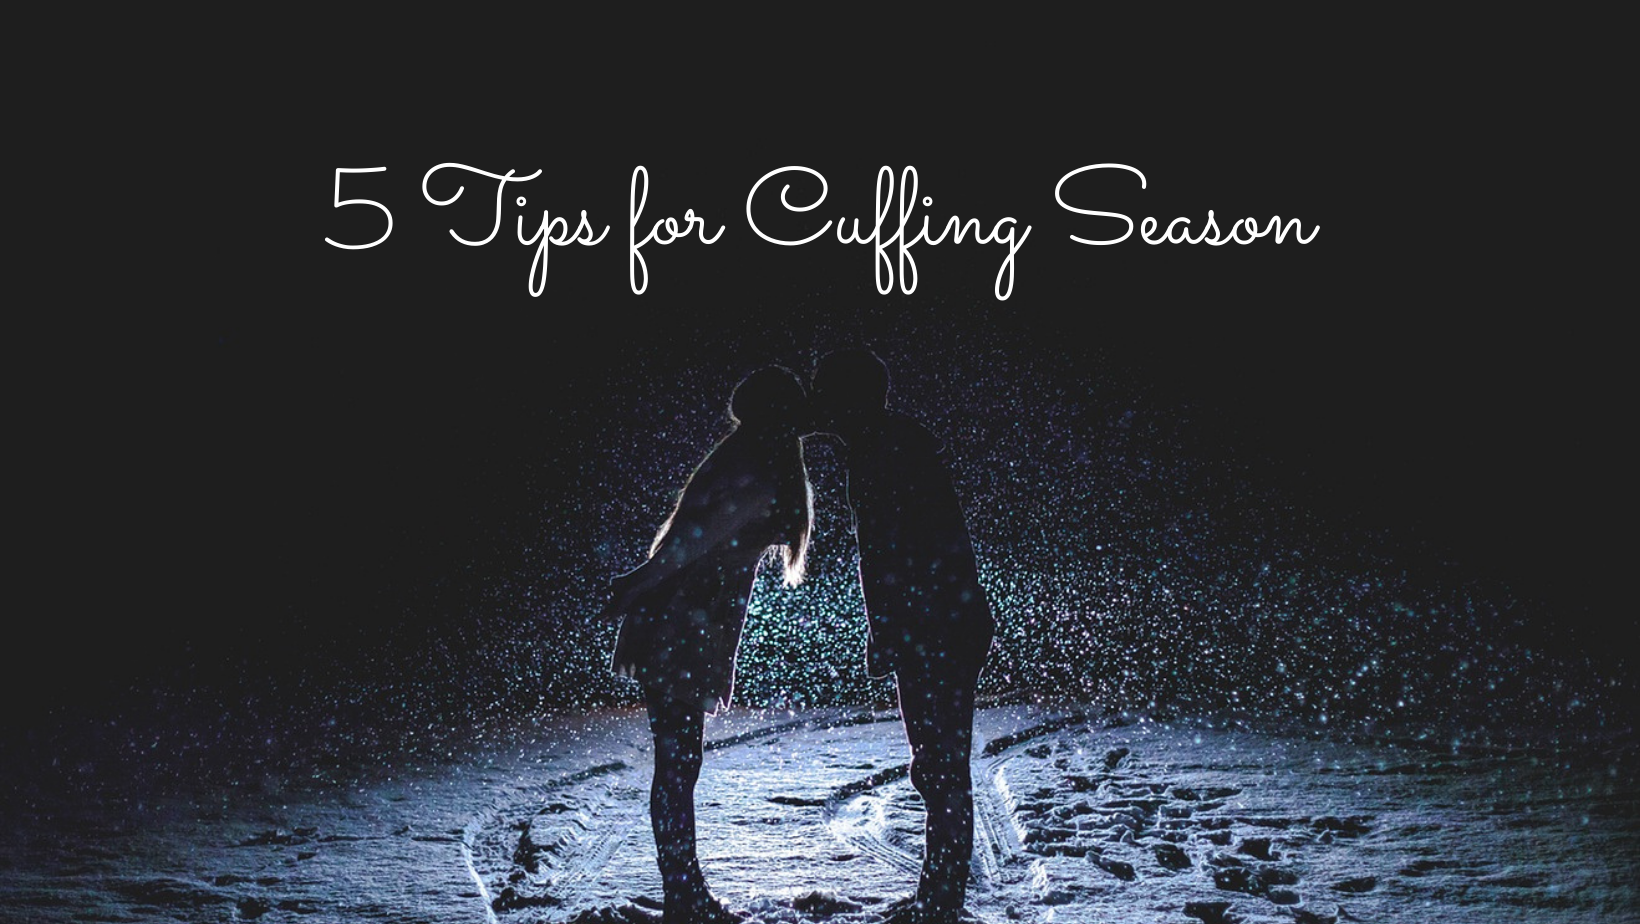 cuffing season guide